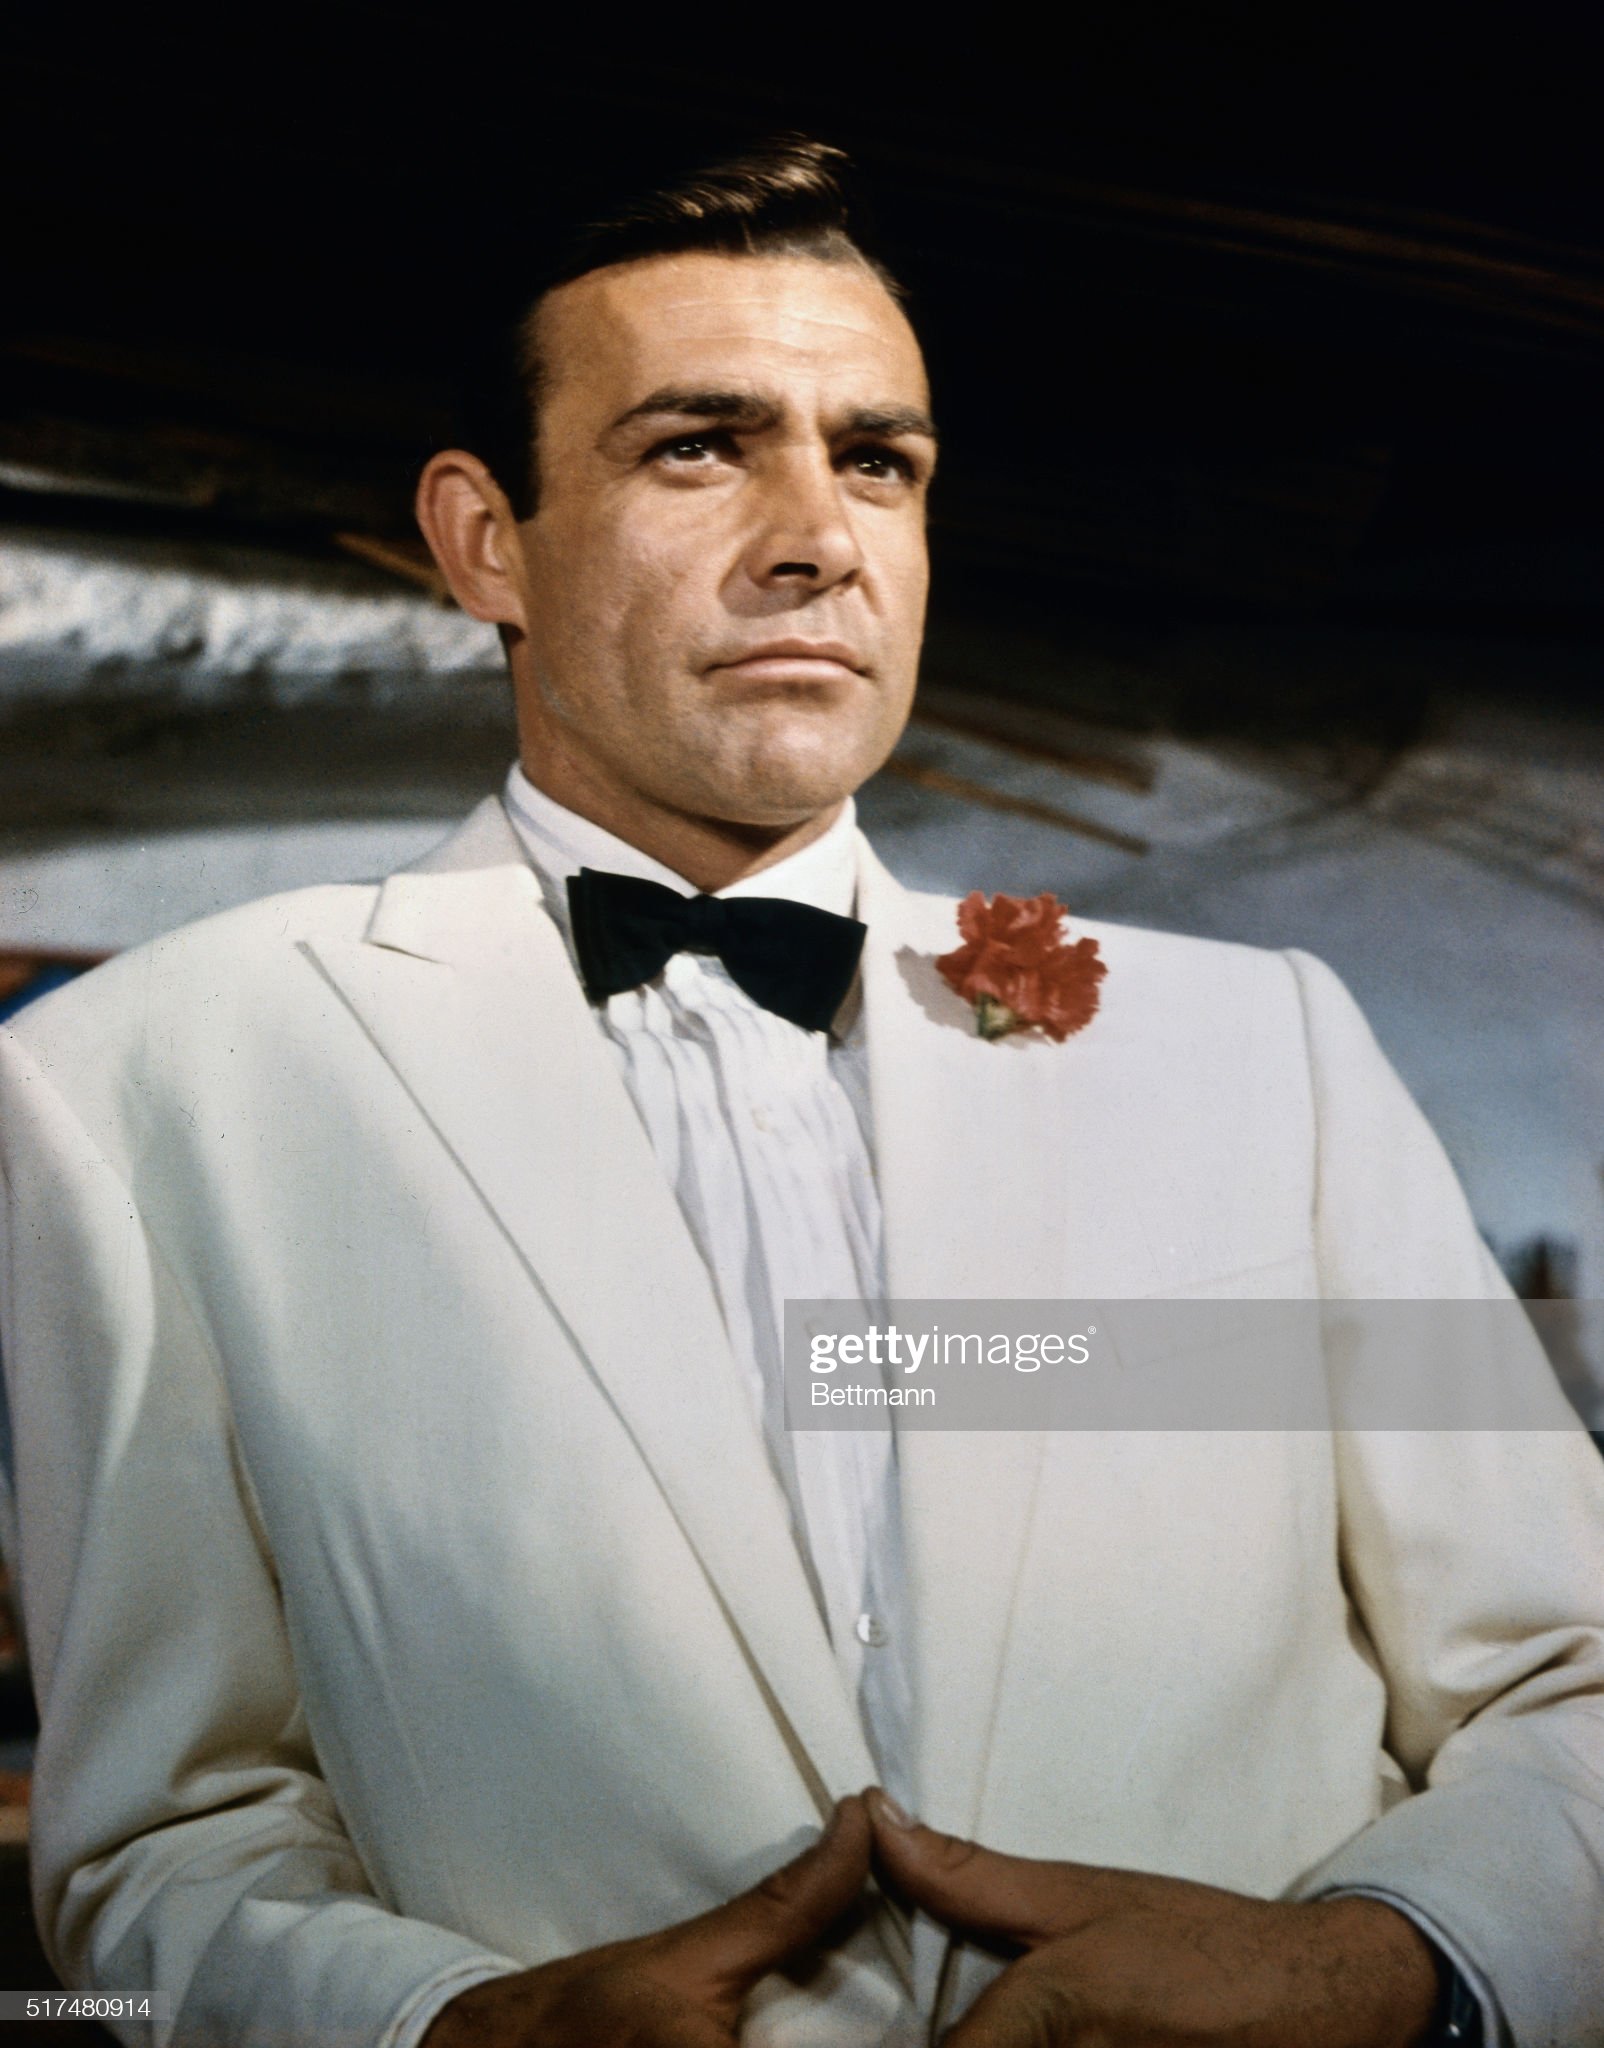 Image of James Bond